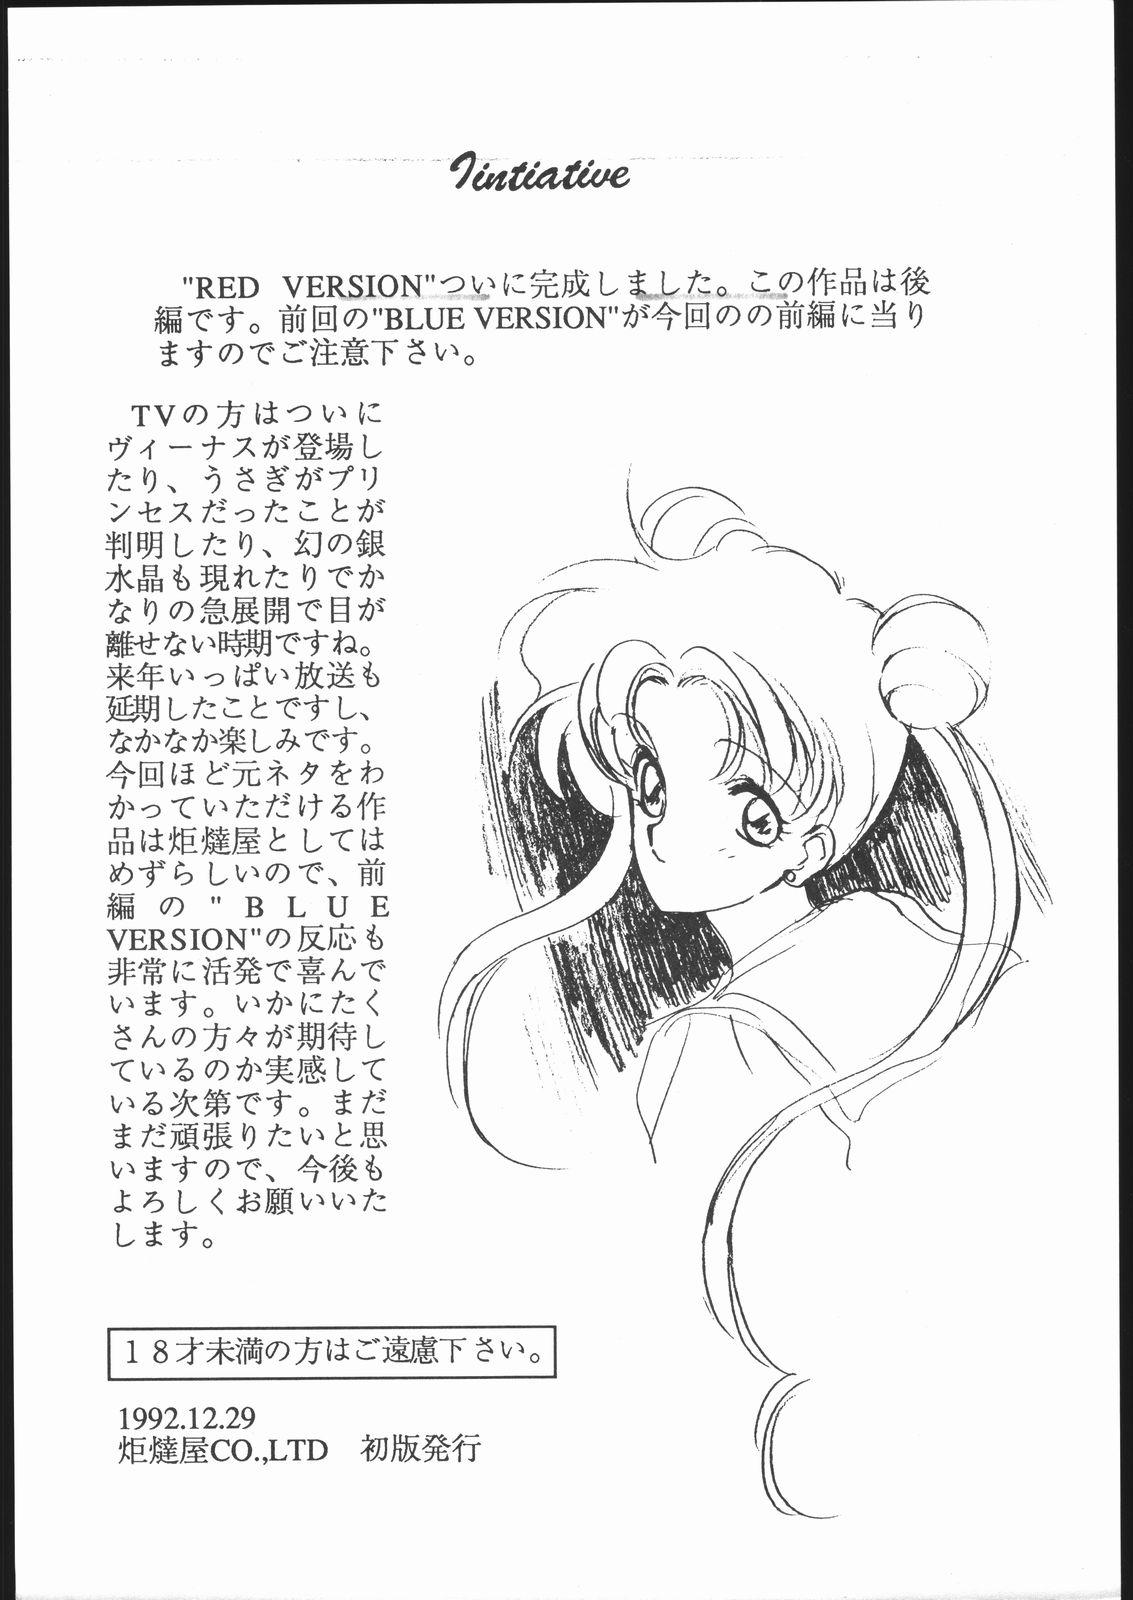 Woman SAILORS RED VERSION - Sailor moon Goldenshower - Picture 2